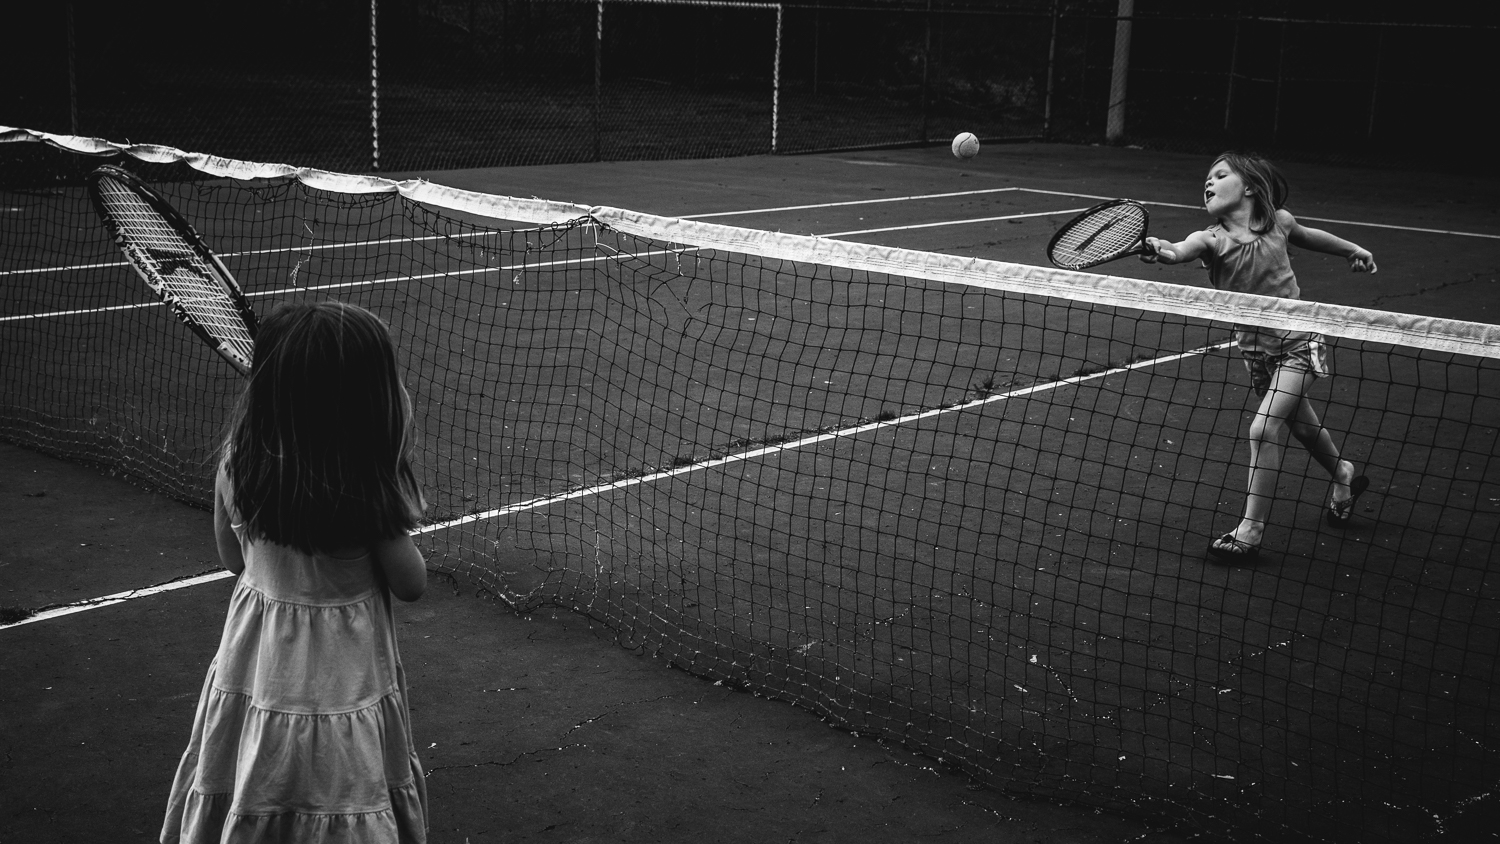 rebecca_wyatt_tennis_girls-7.jpg